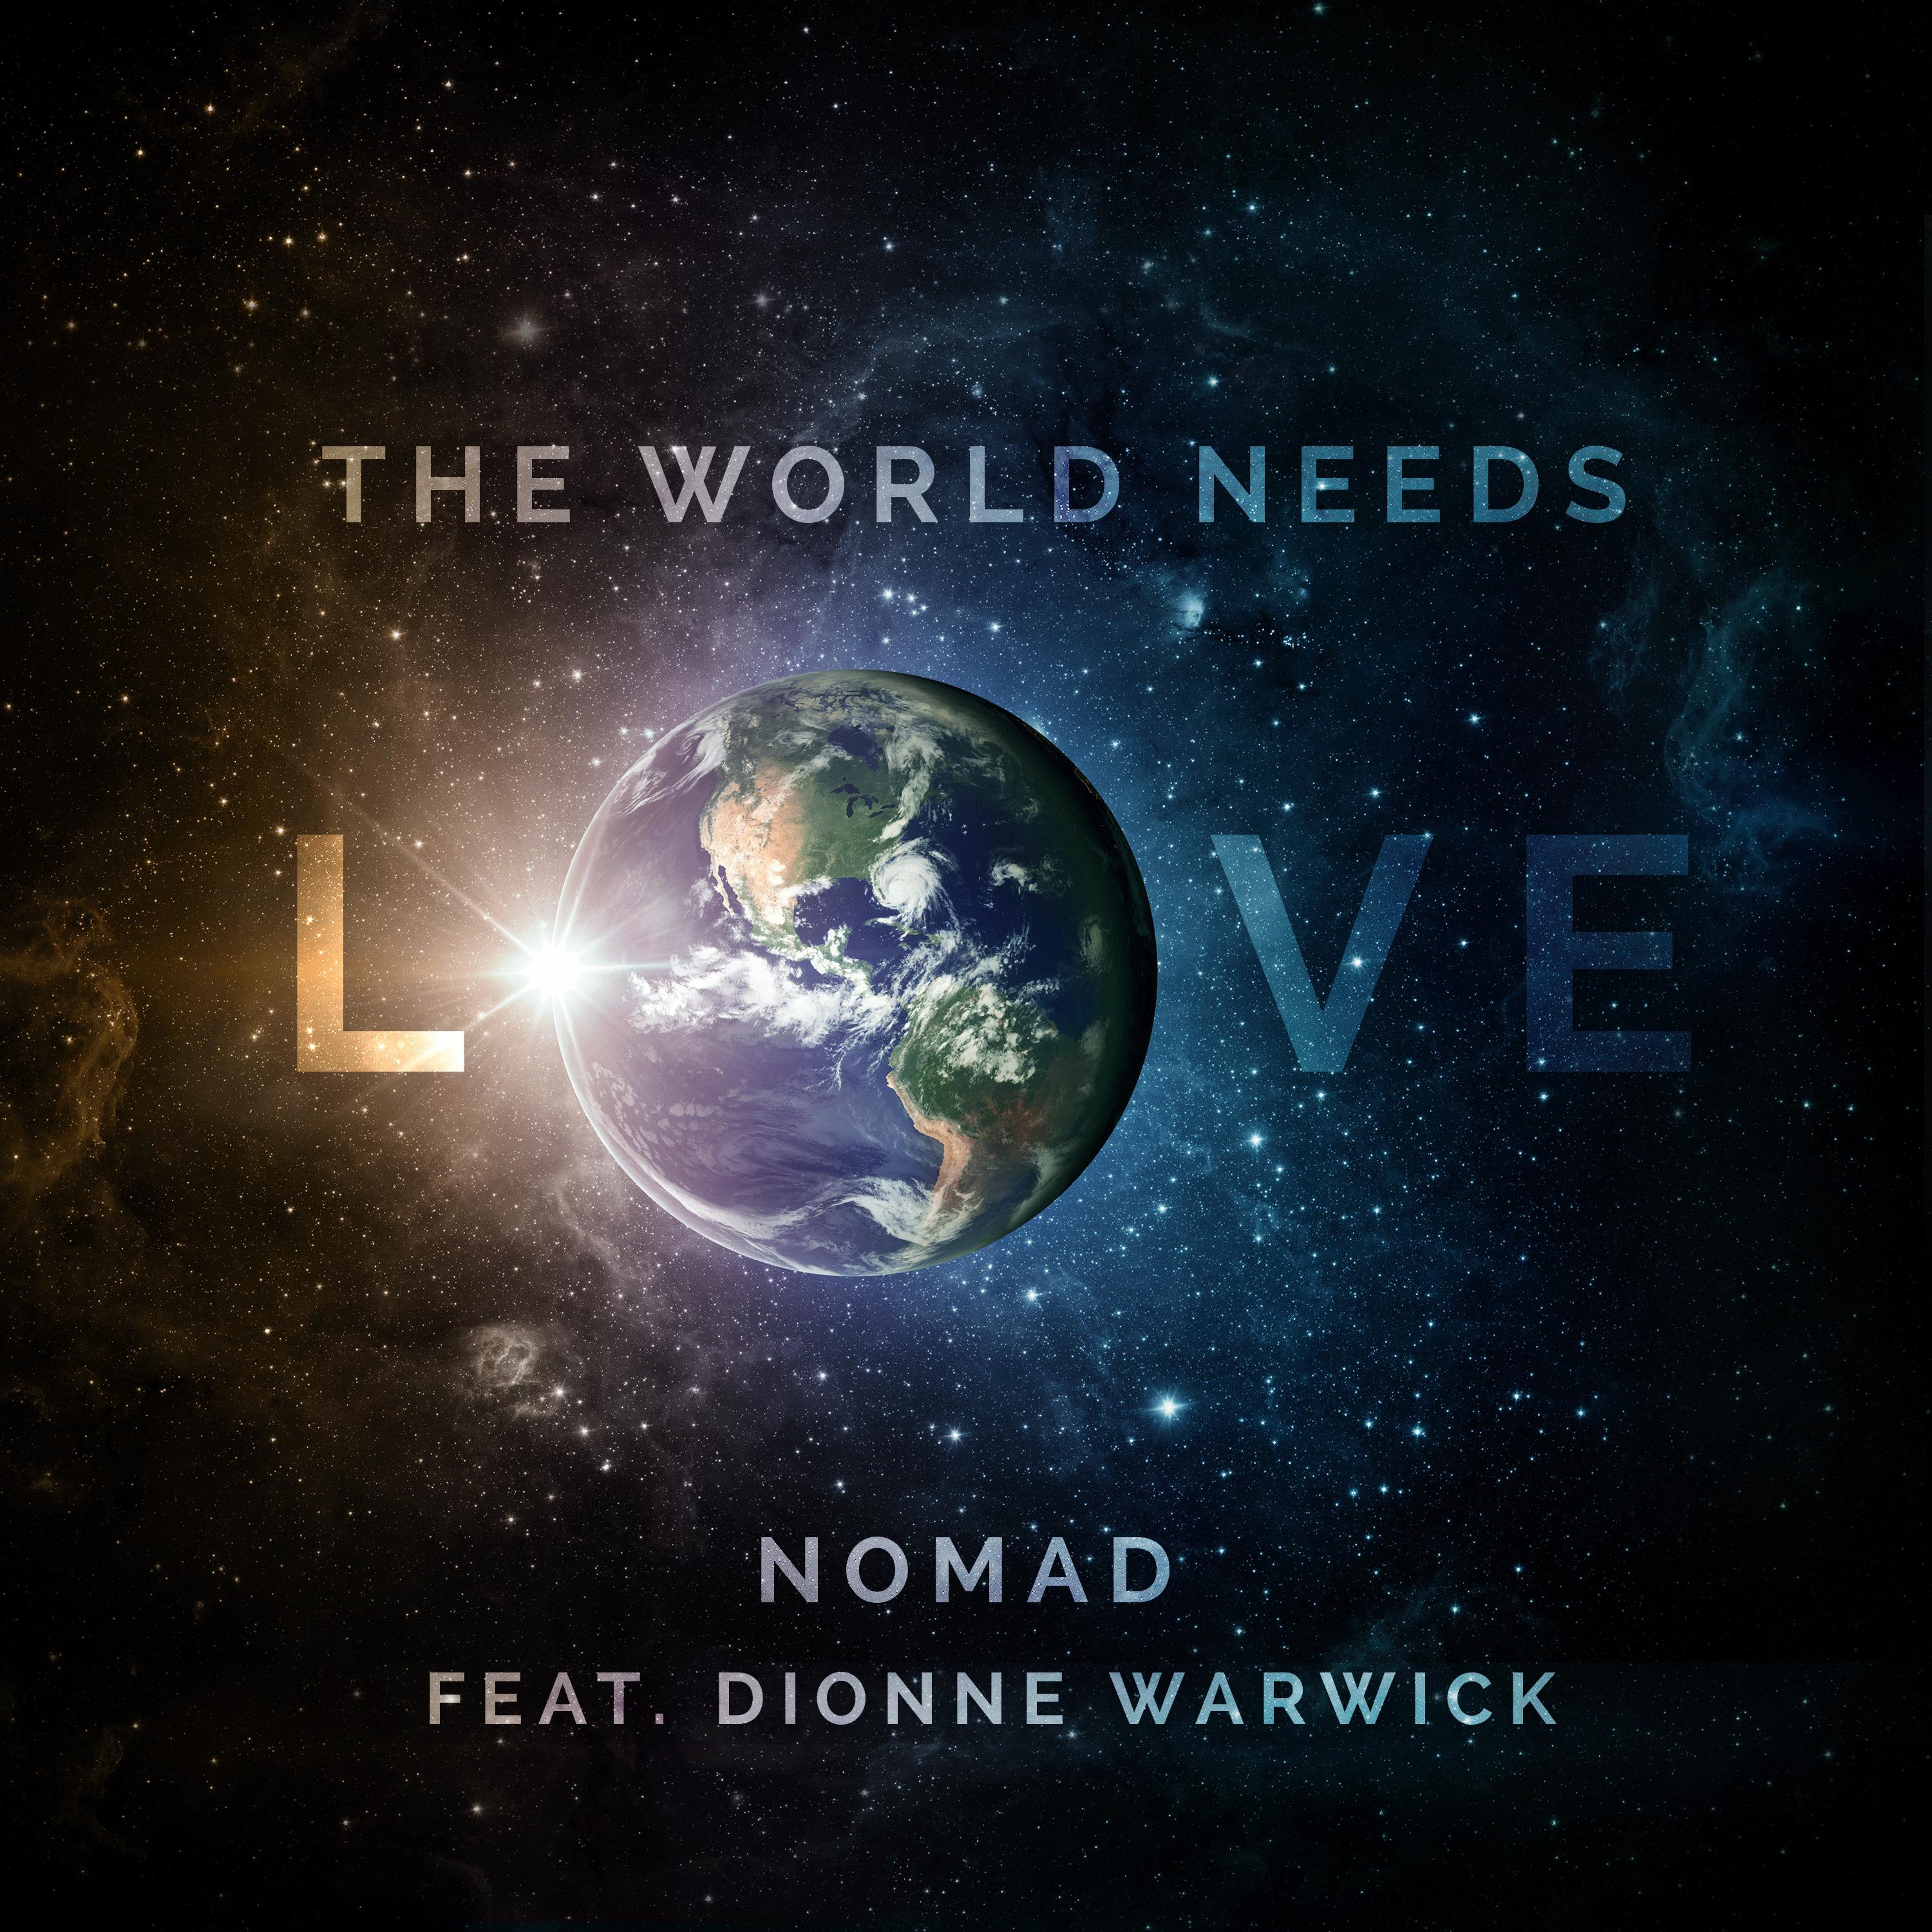 The World Needs Love (feat. Dionne Warwick)